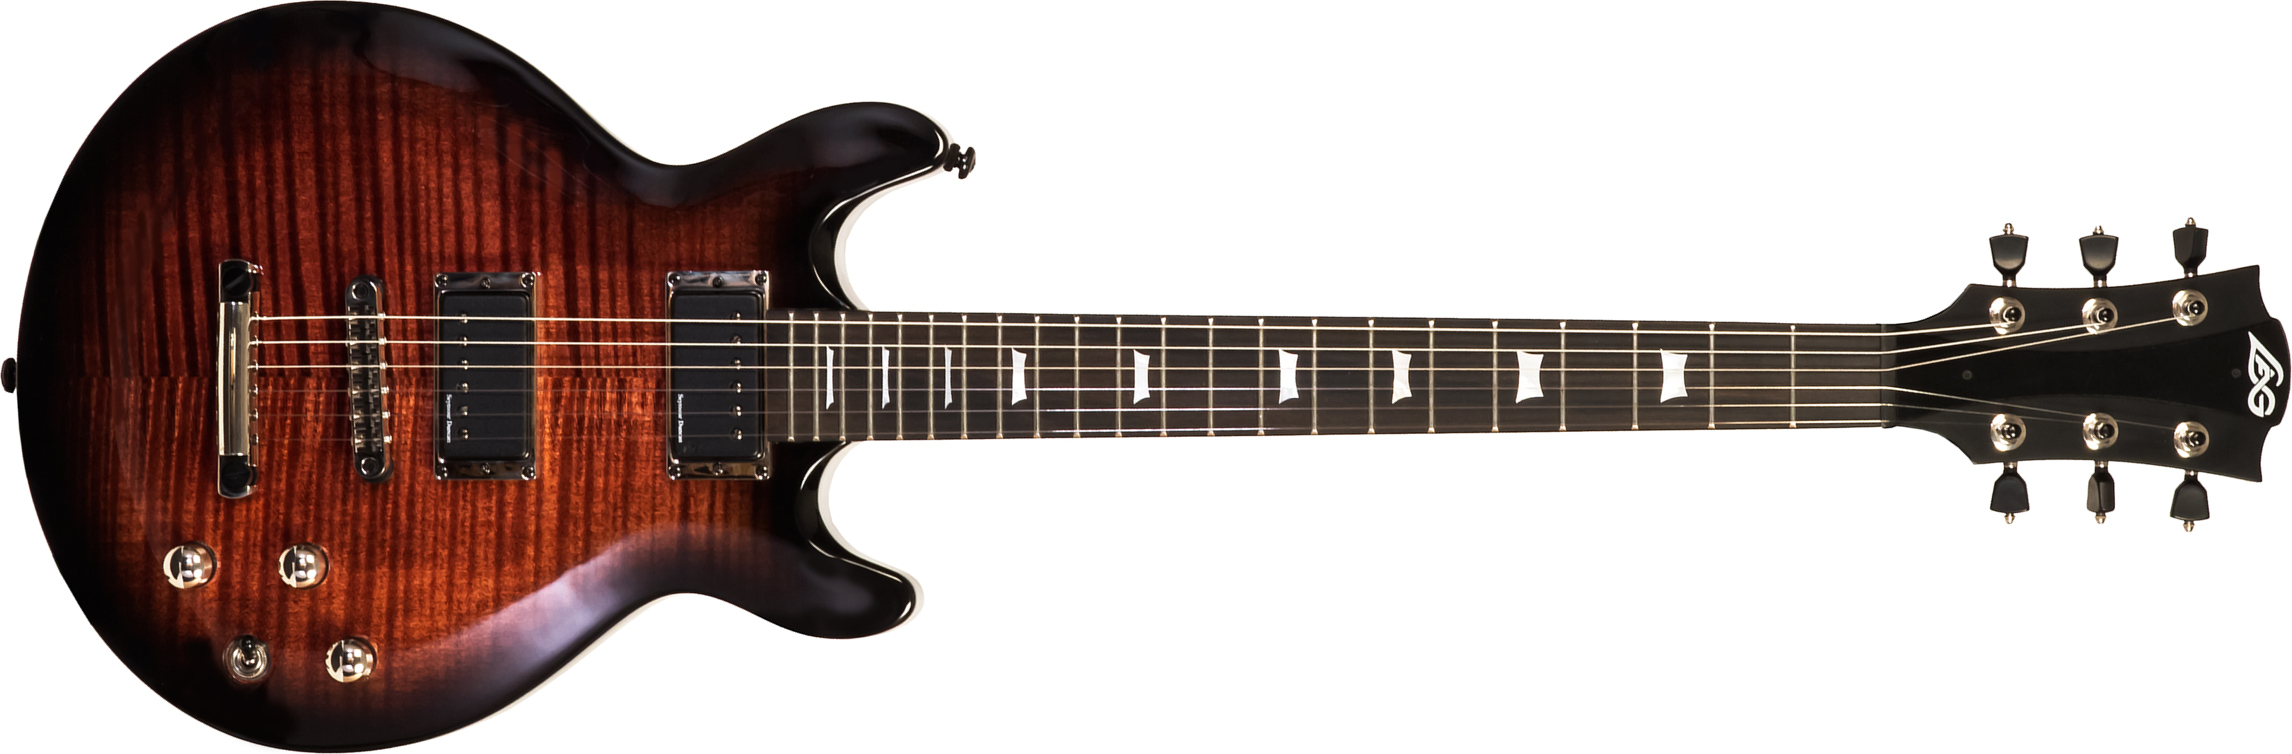 Lag Roxane R500 2h Seymour Duncan Ht Bw - Black Shadow - Double Cut E-Gitarre - Main picture